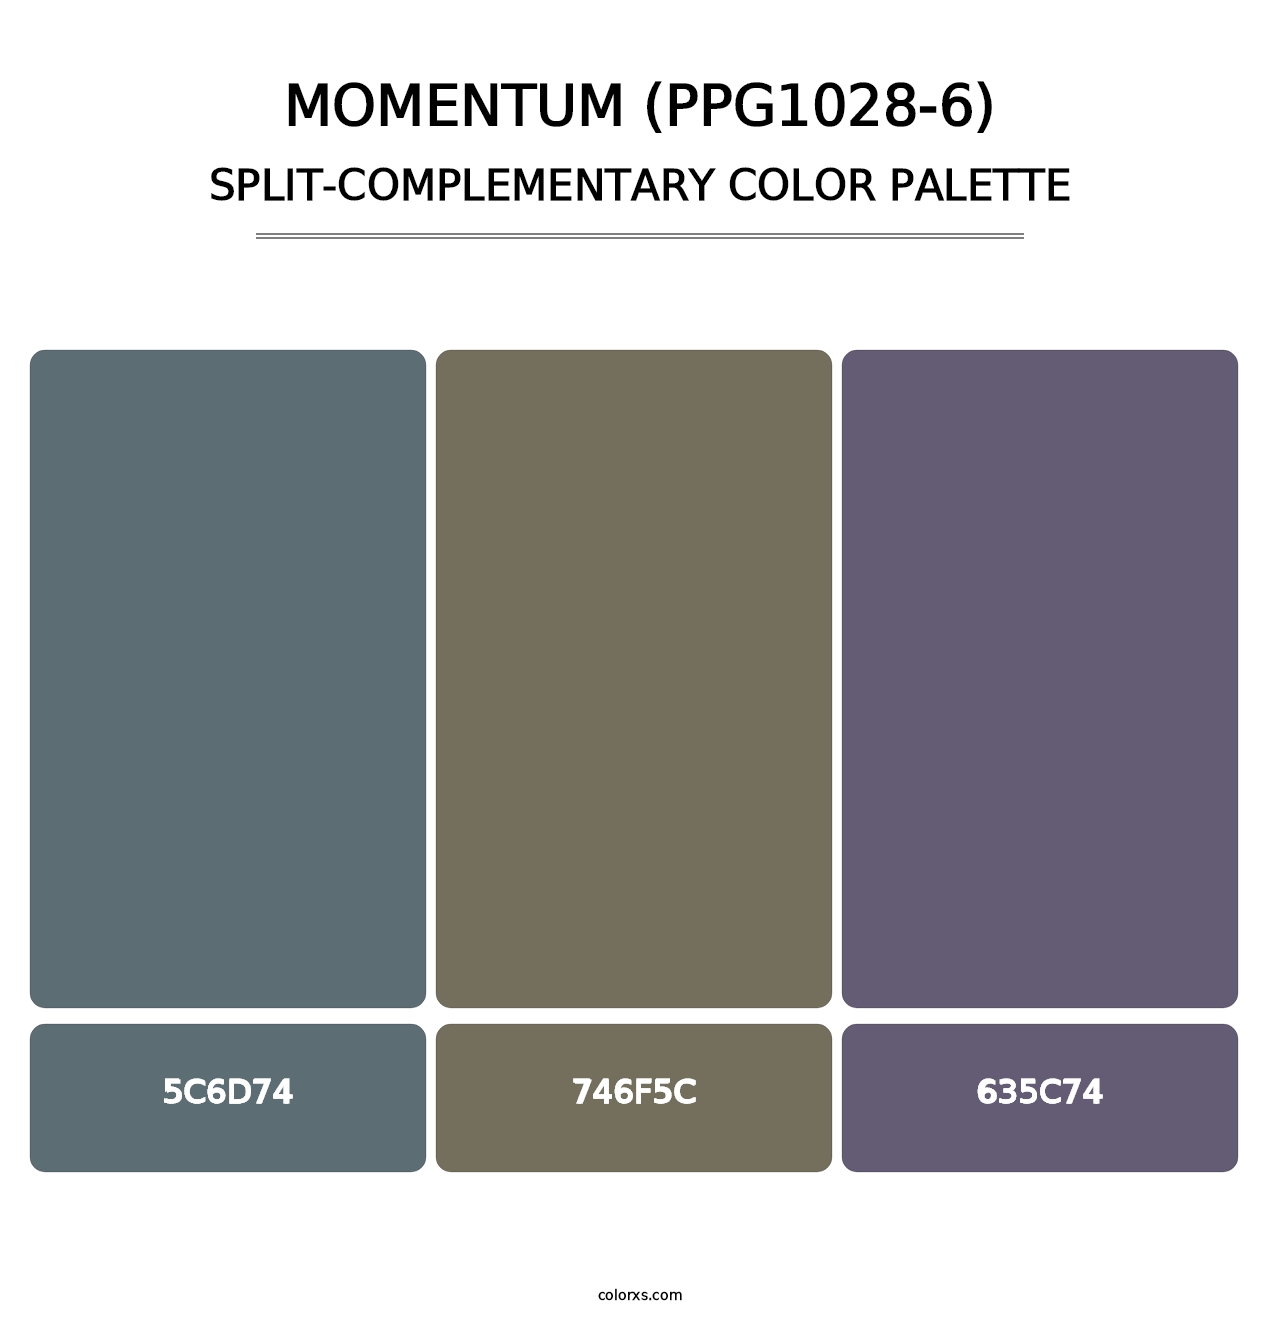 Momentum (PPG1028-6) - Split-Complementary Color Palette